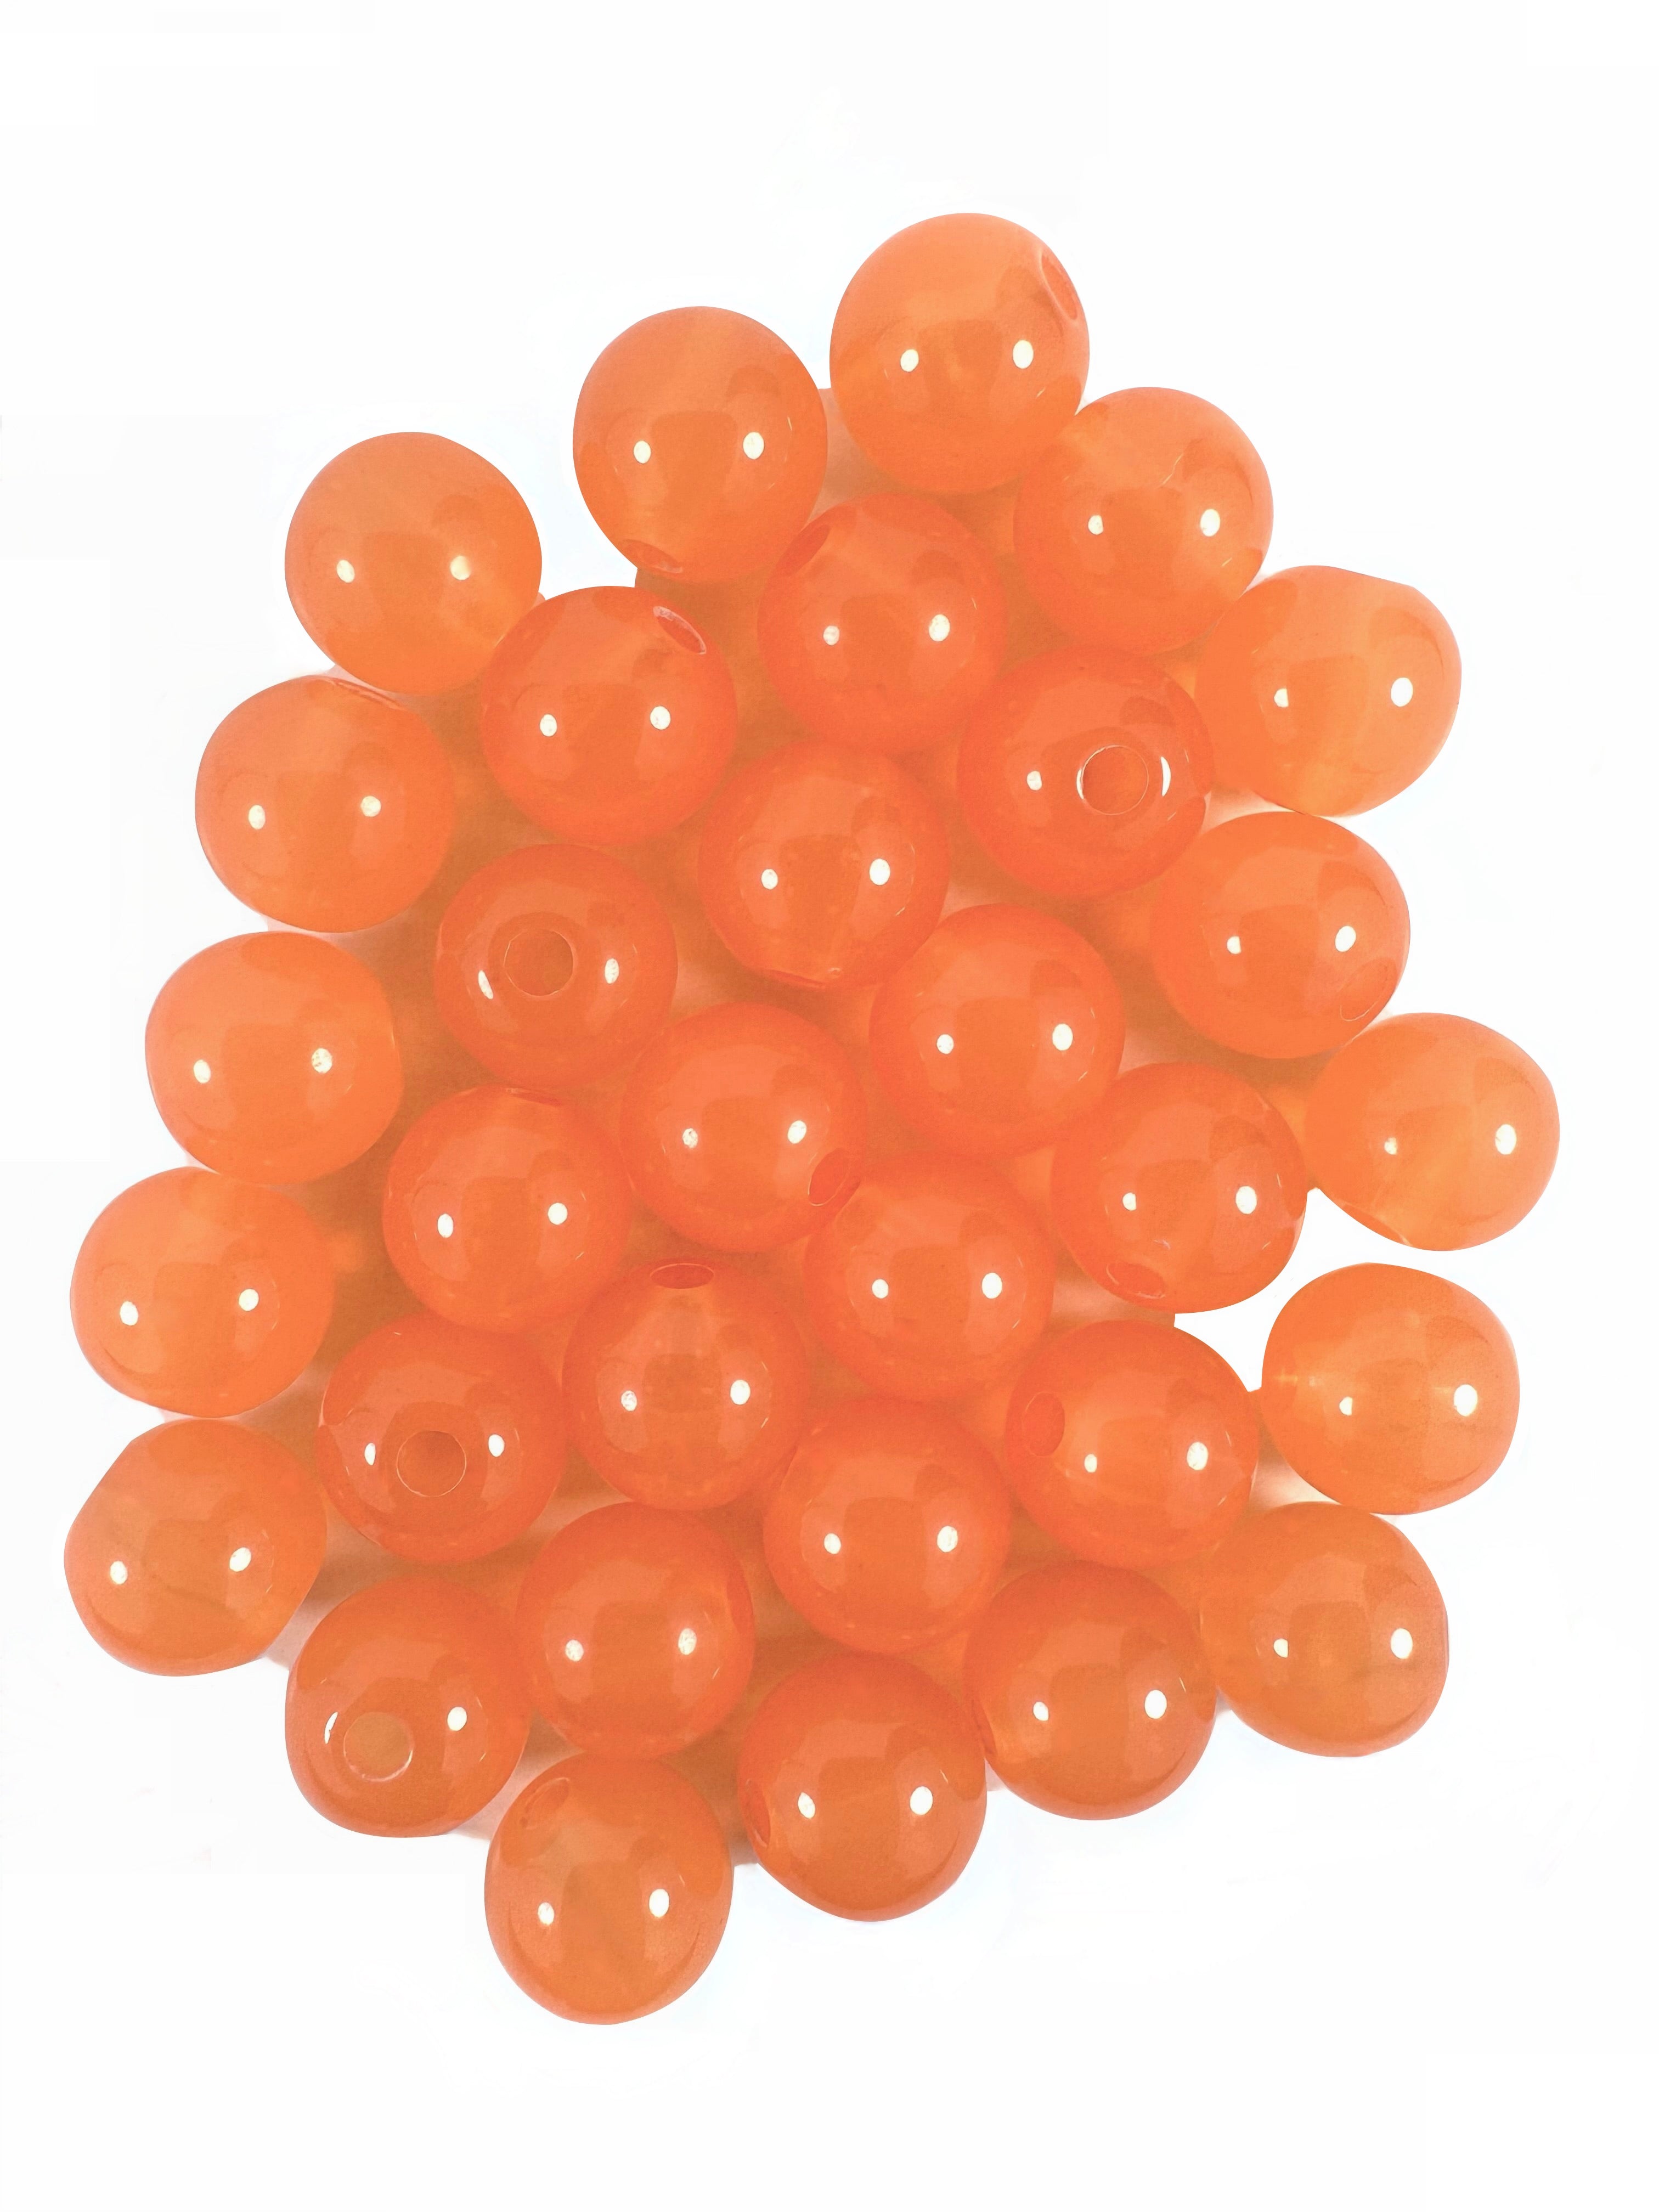 Glow Roe Beads for Steelhead Fishing: Mimic Real Eggs with